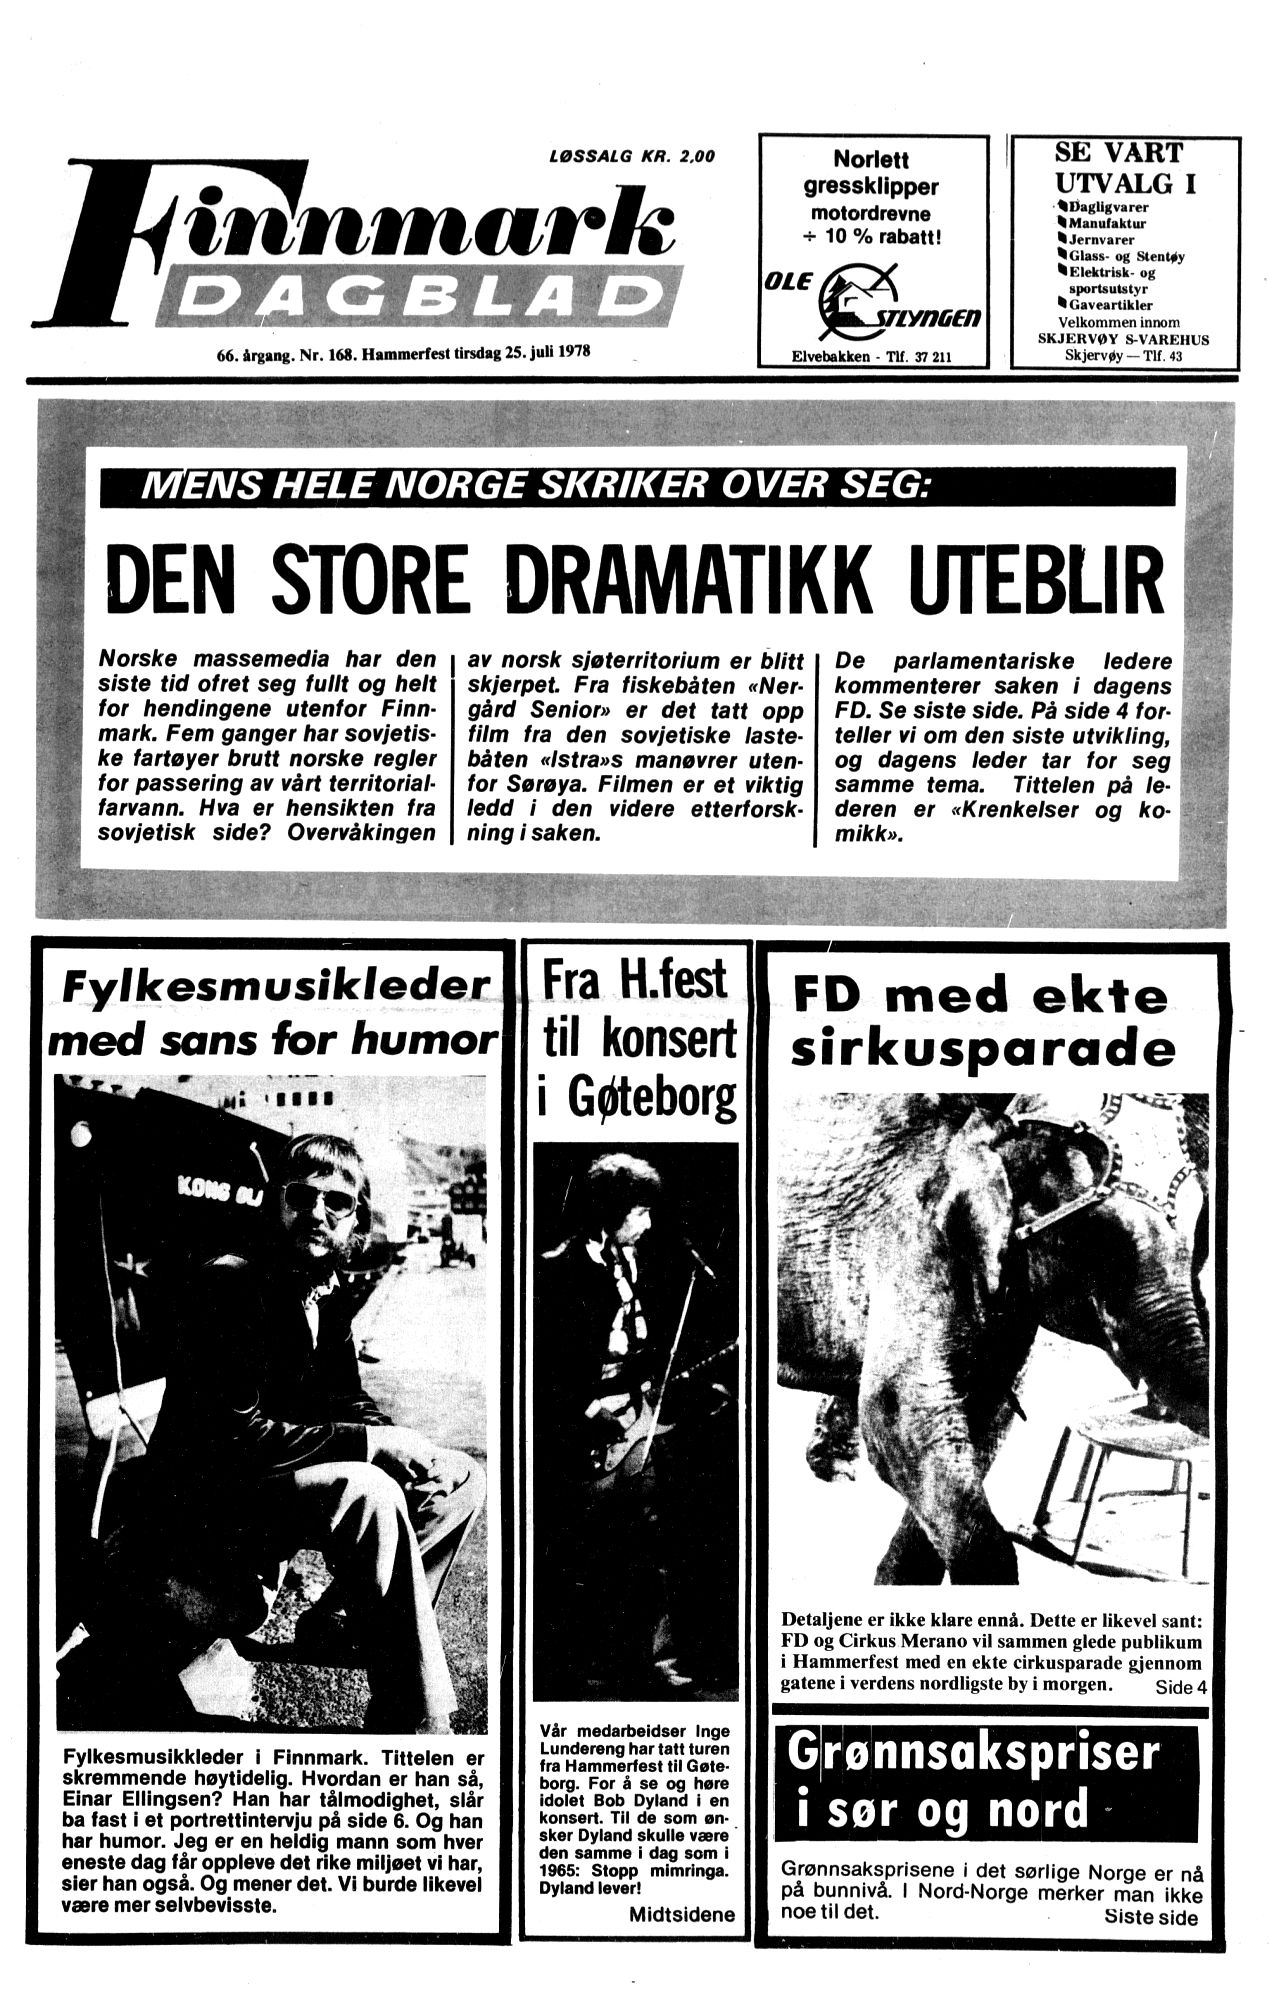 finnmarlk dagblad magazine Bob Dylan front cover